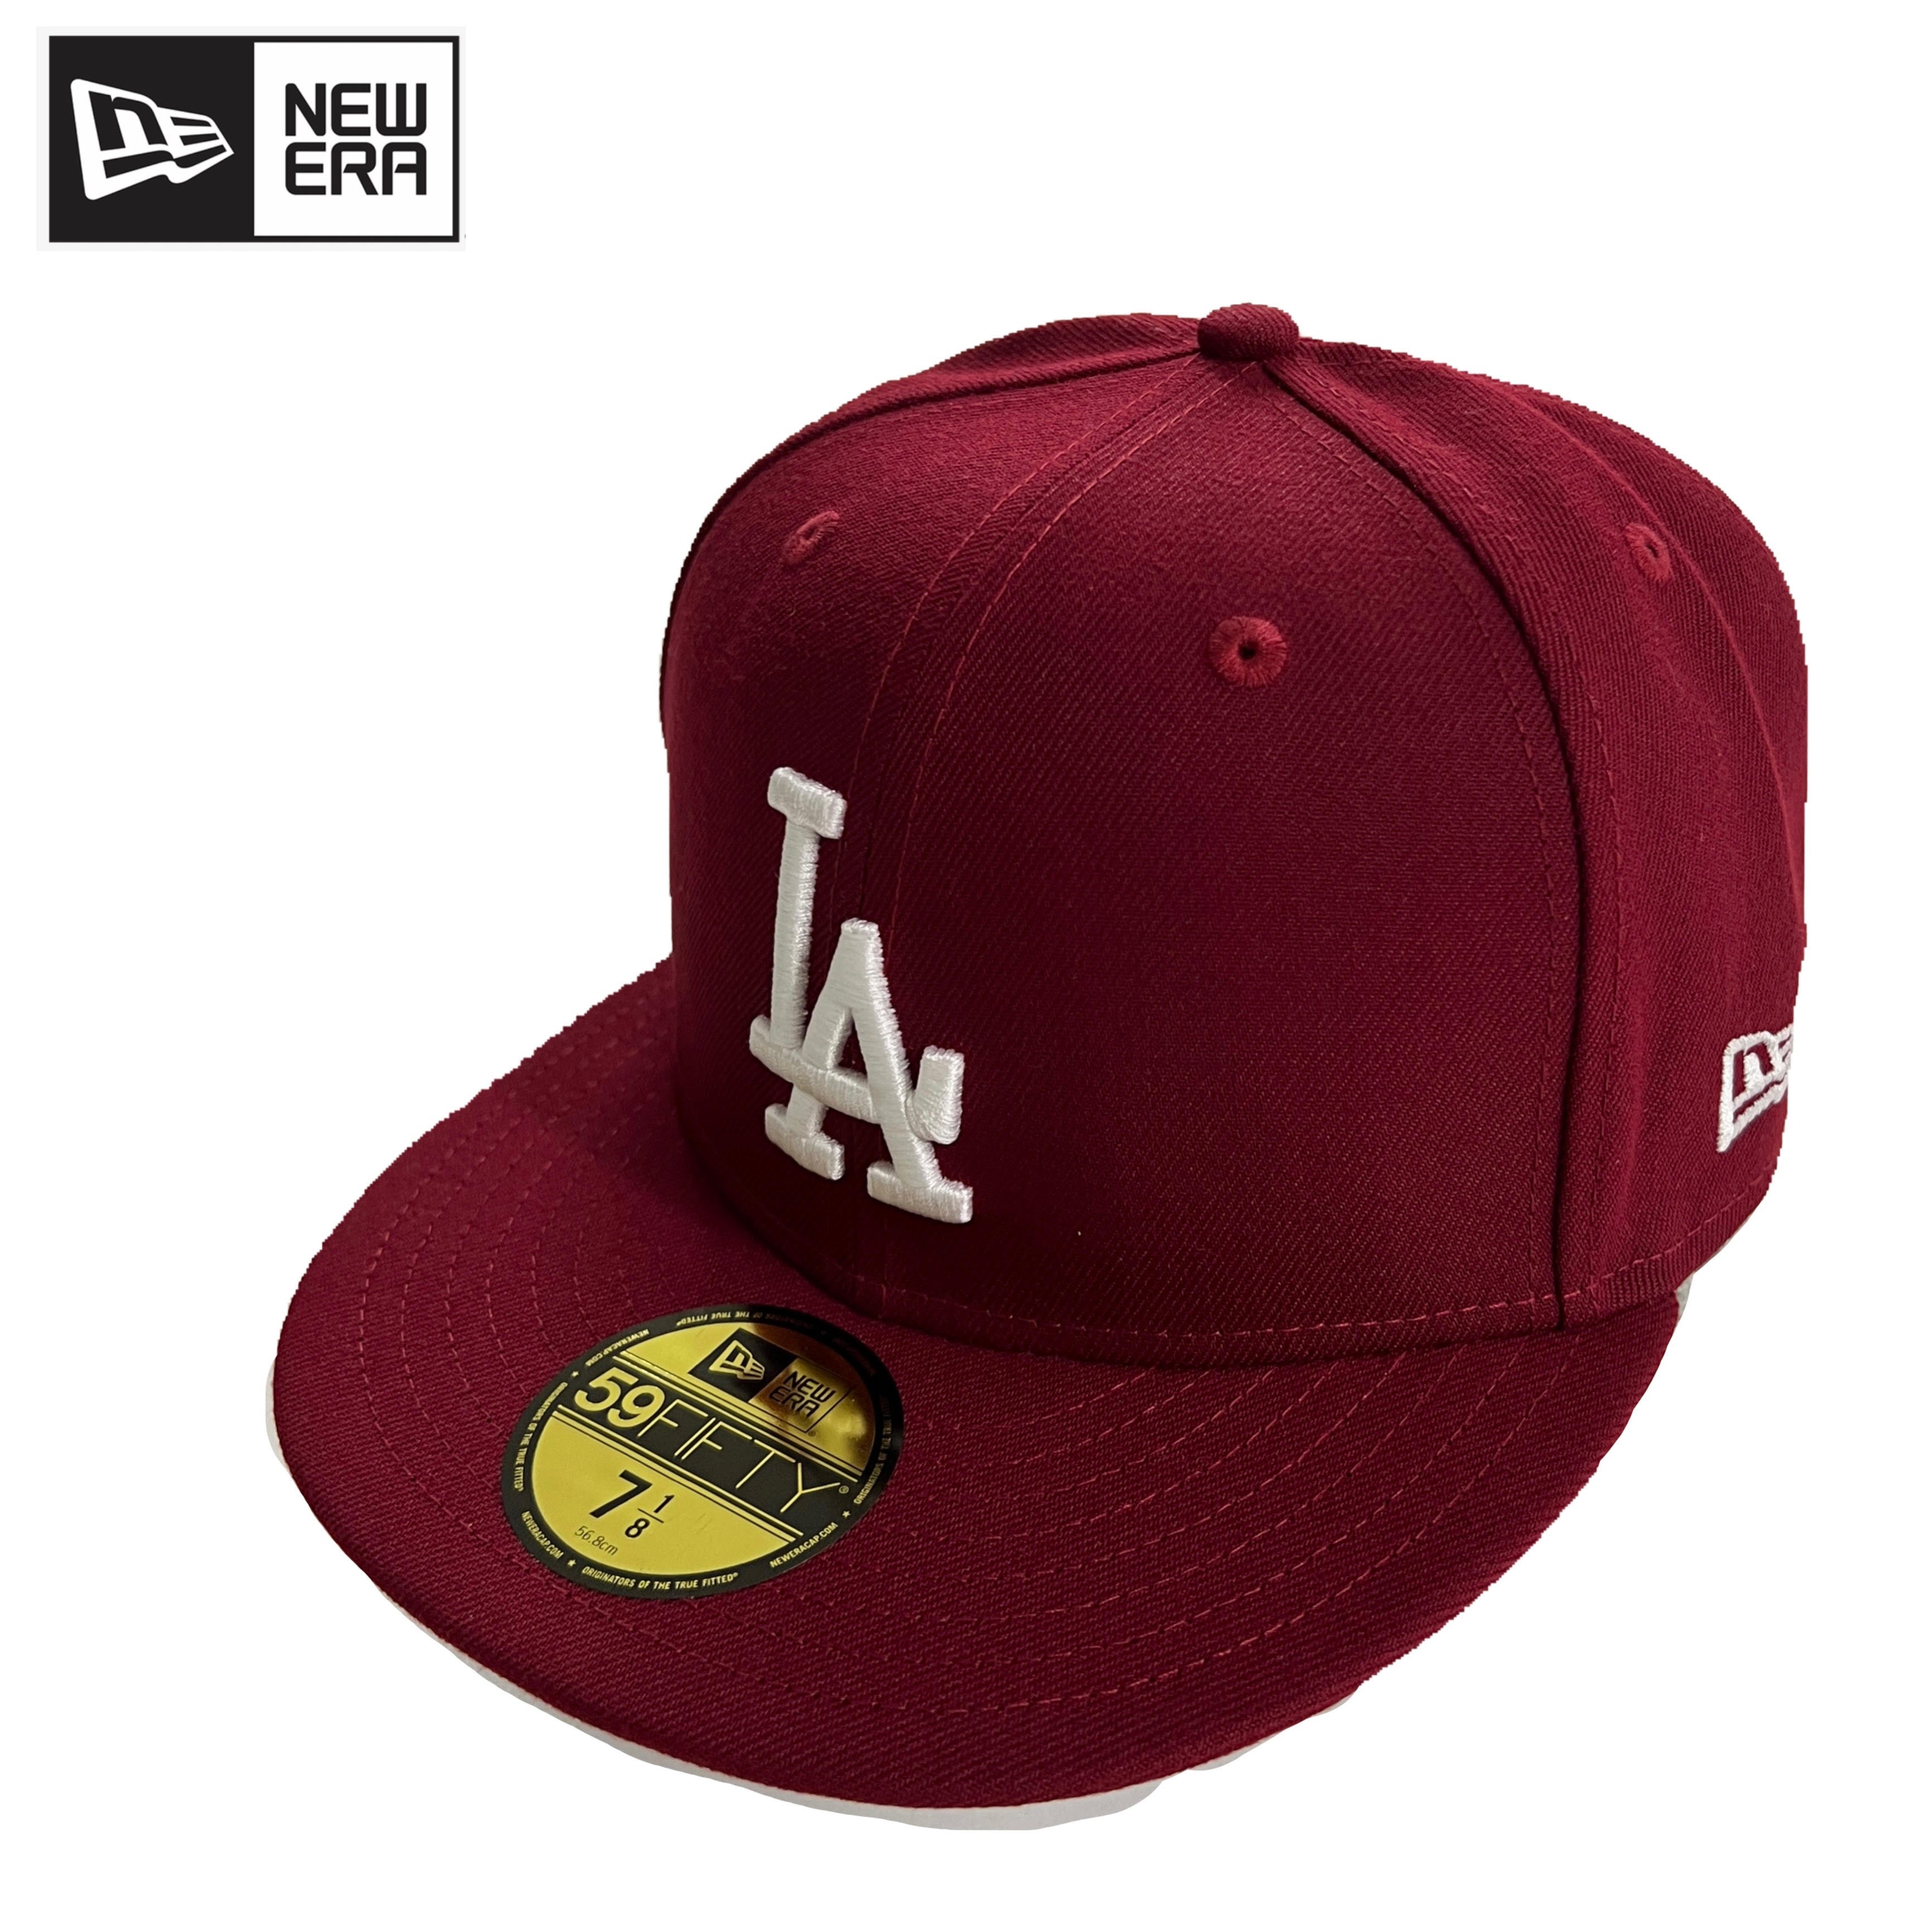 Los Angeles Dodgers New Era Burgundy 59 Fifty Hat